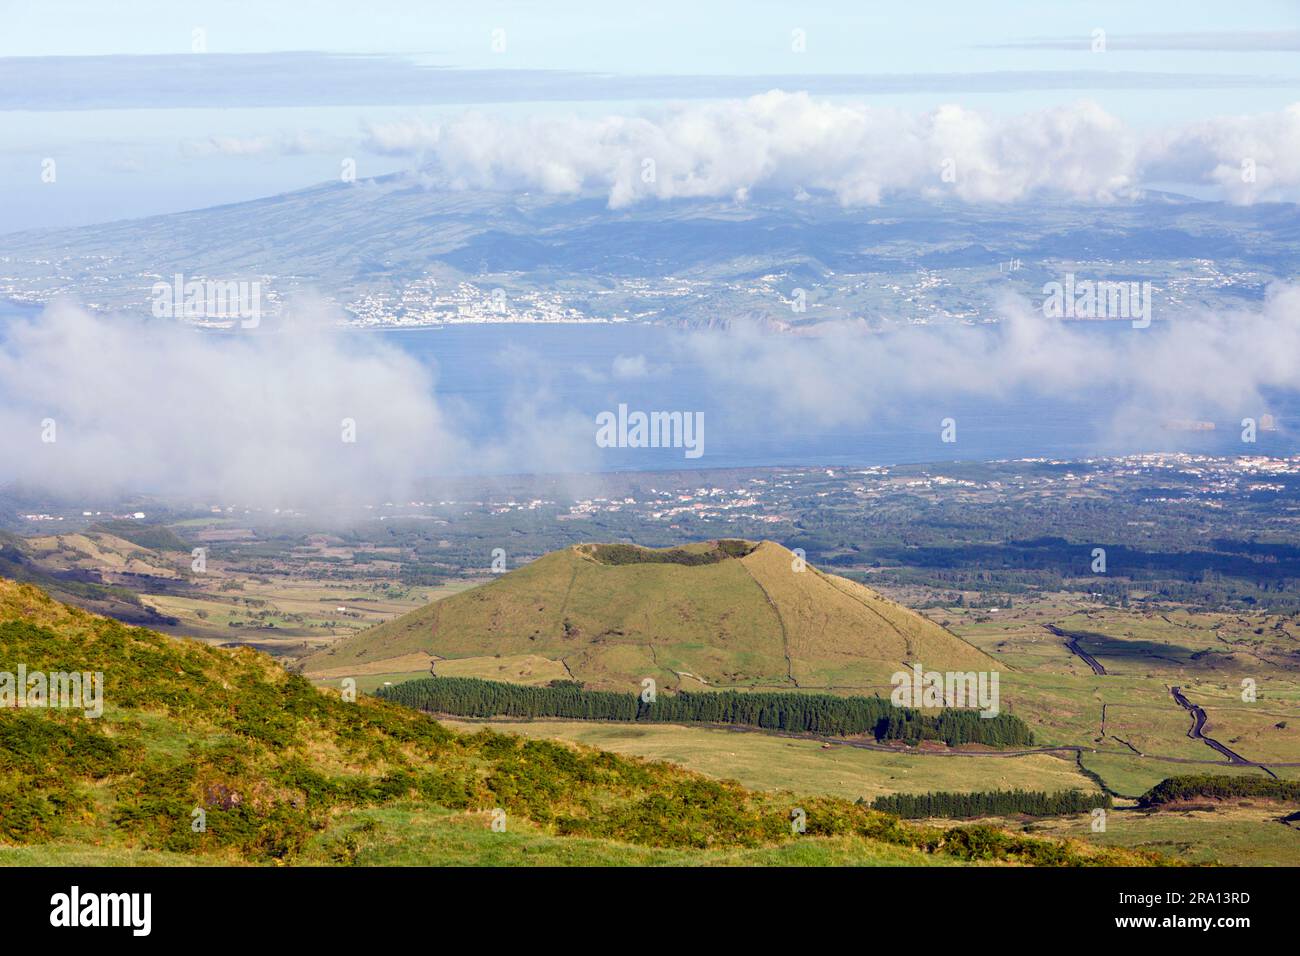 Pico Alto volcanic mountain, Faial Island in the background, Pico Island, Azores, Portugal Stock Photo